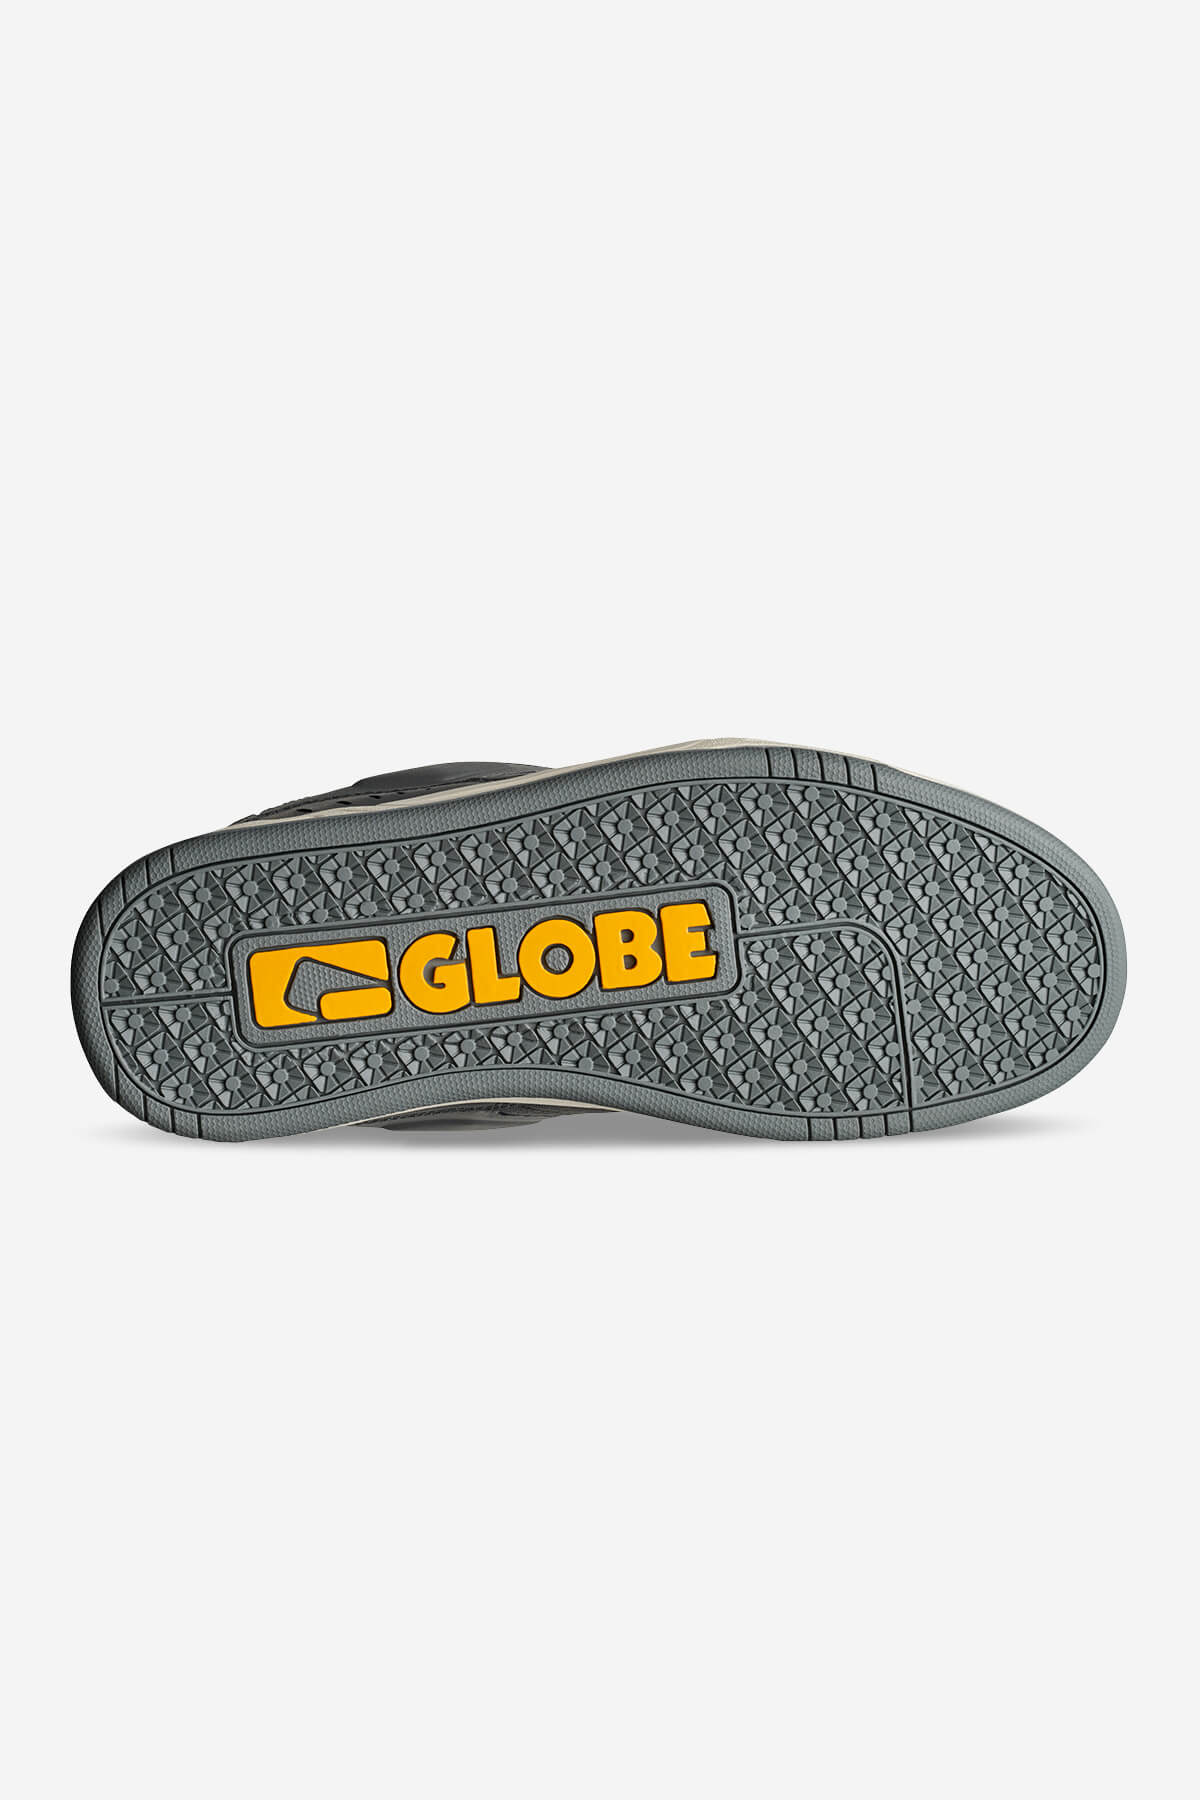 Globe - Fusion - Piombo/Antique - skateboard Scarpe